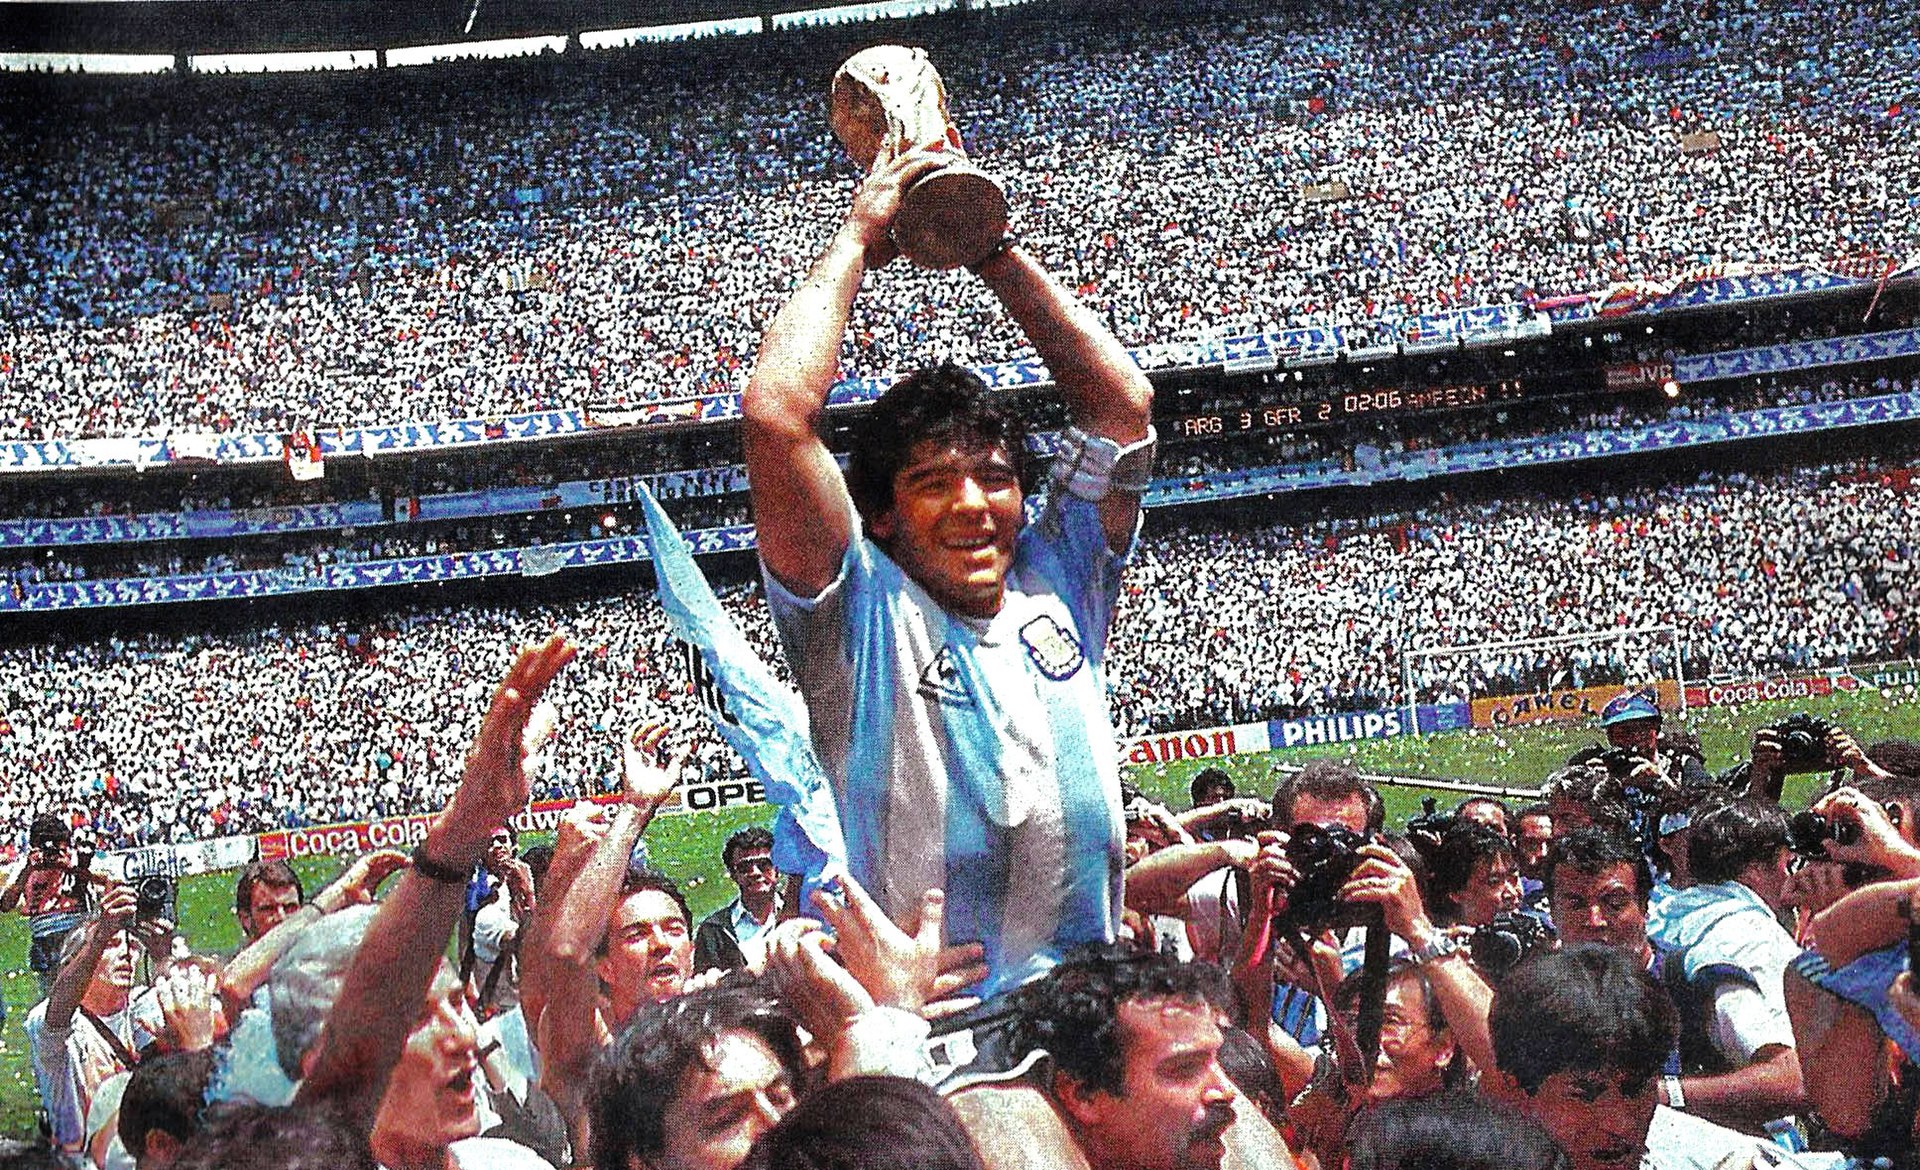 Maradona in Colombia